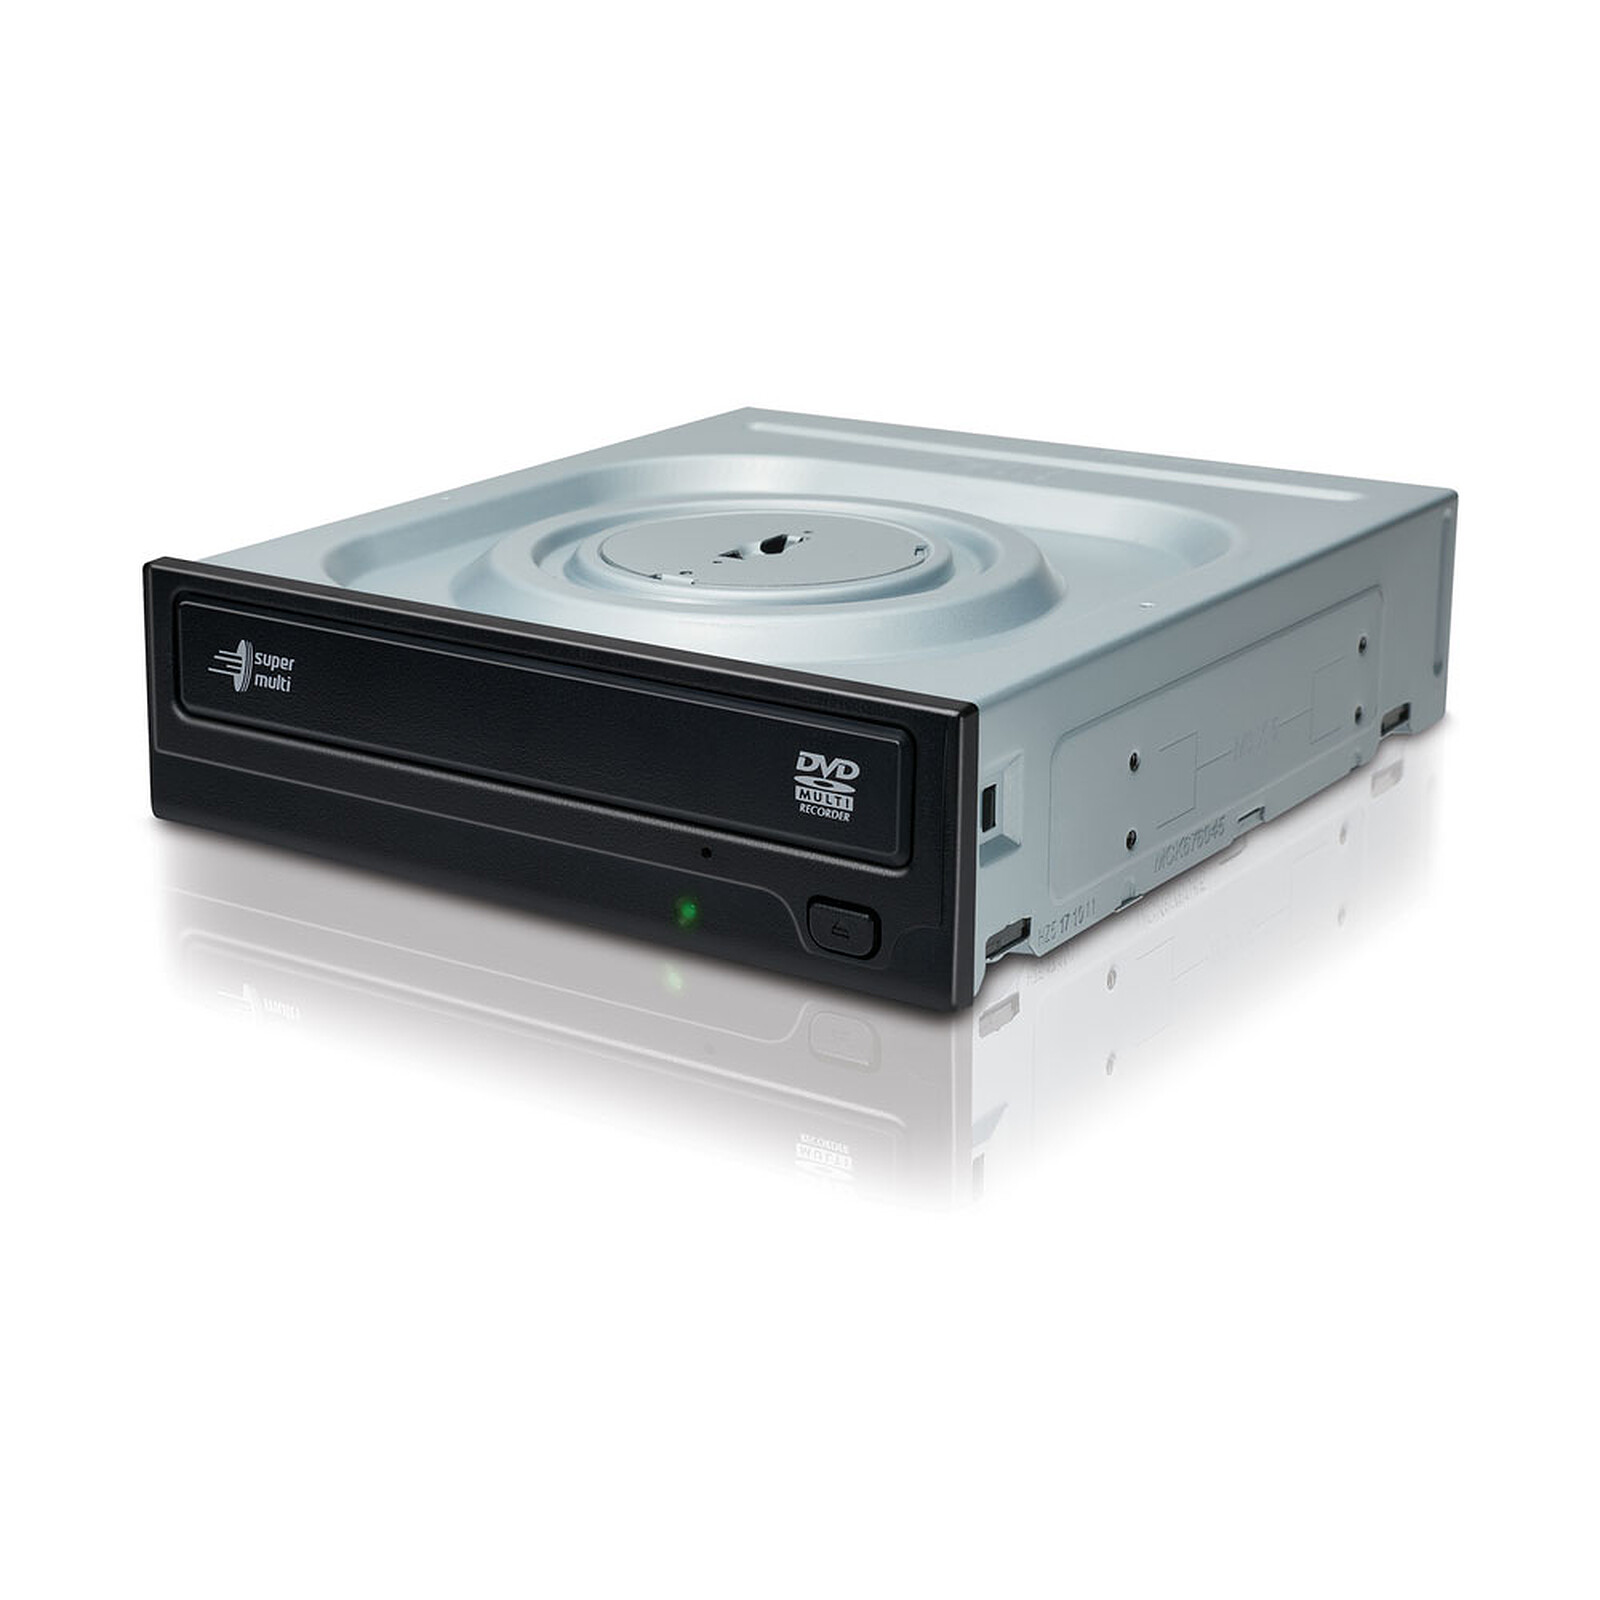 Grabador disco duro lg Reproductores DVD de segunda mano baratos